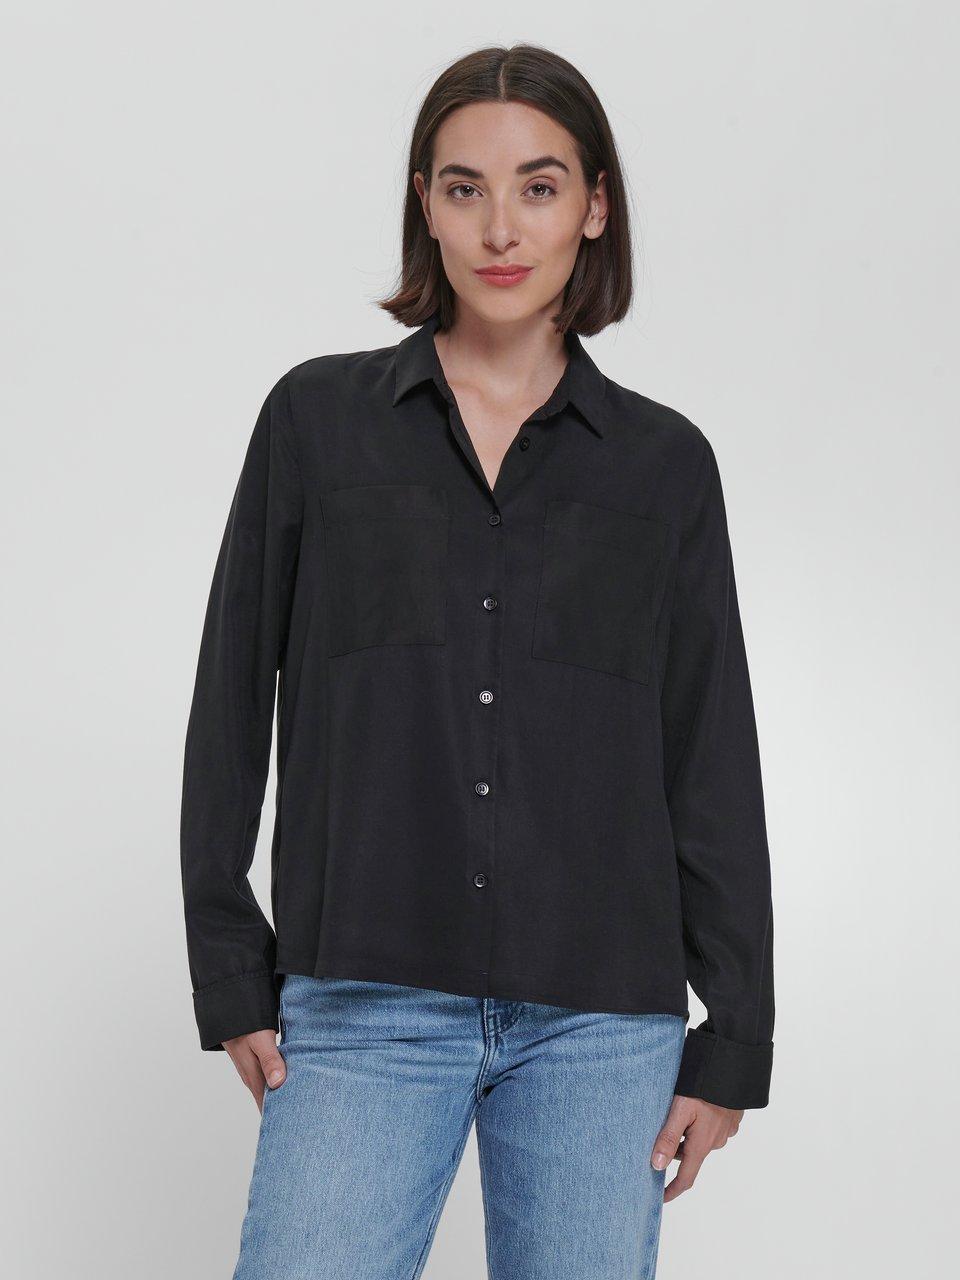 WALL London - La blouse 100% lyocell